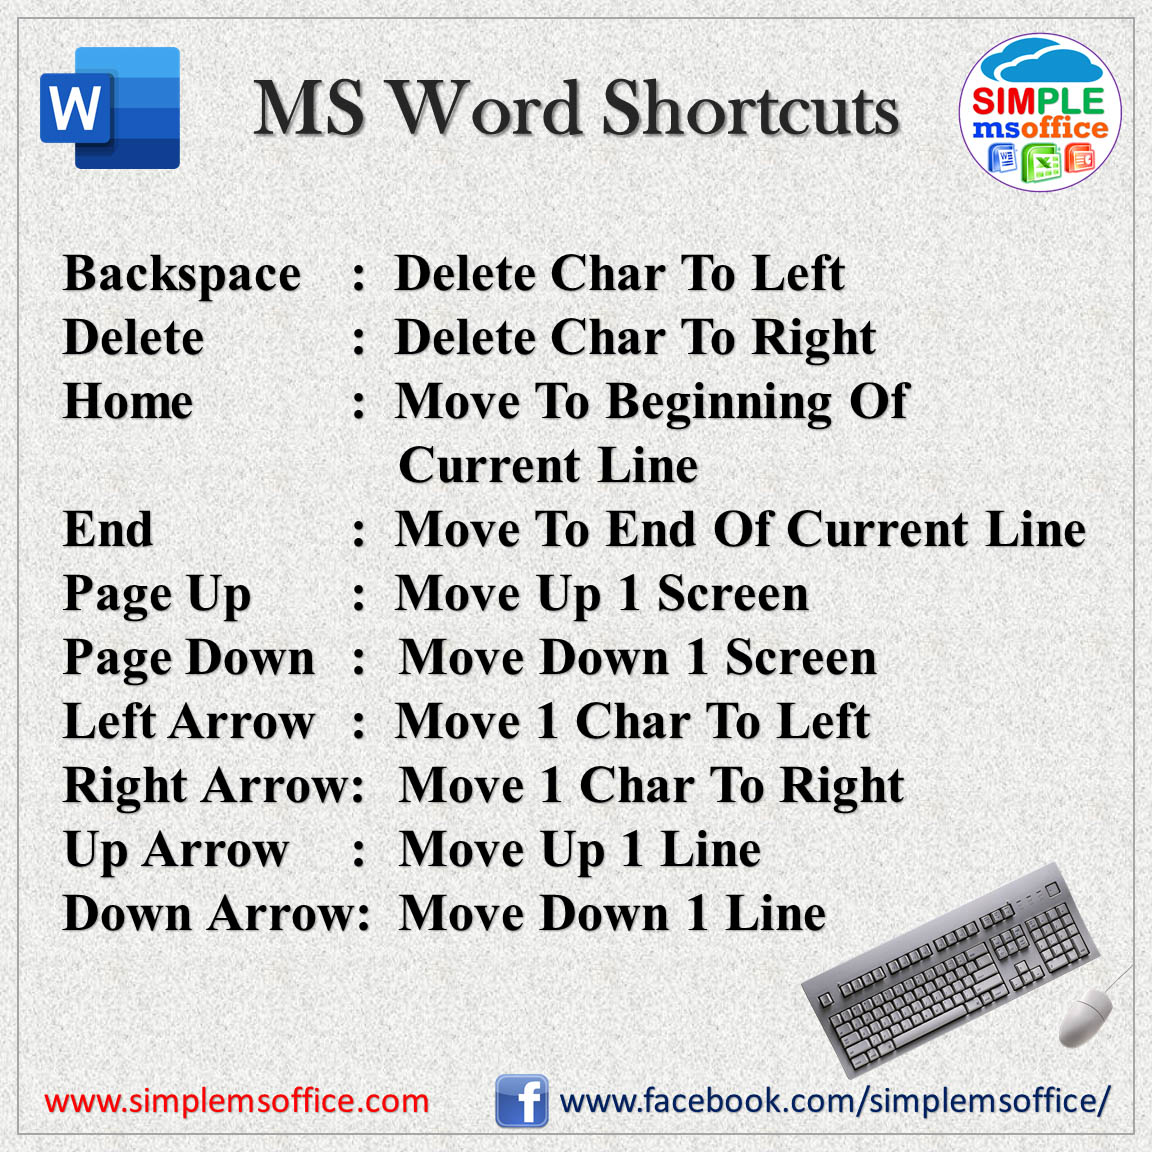 ms-word-shortcuts-01-simplemsoffice